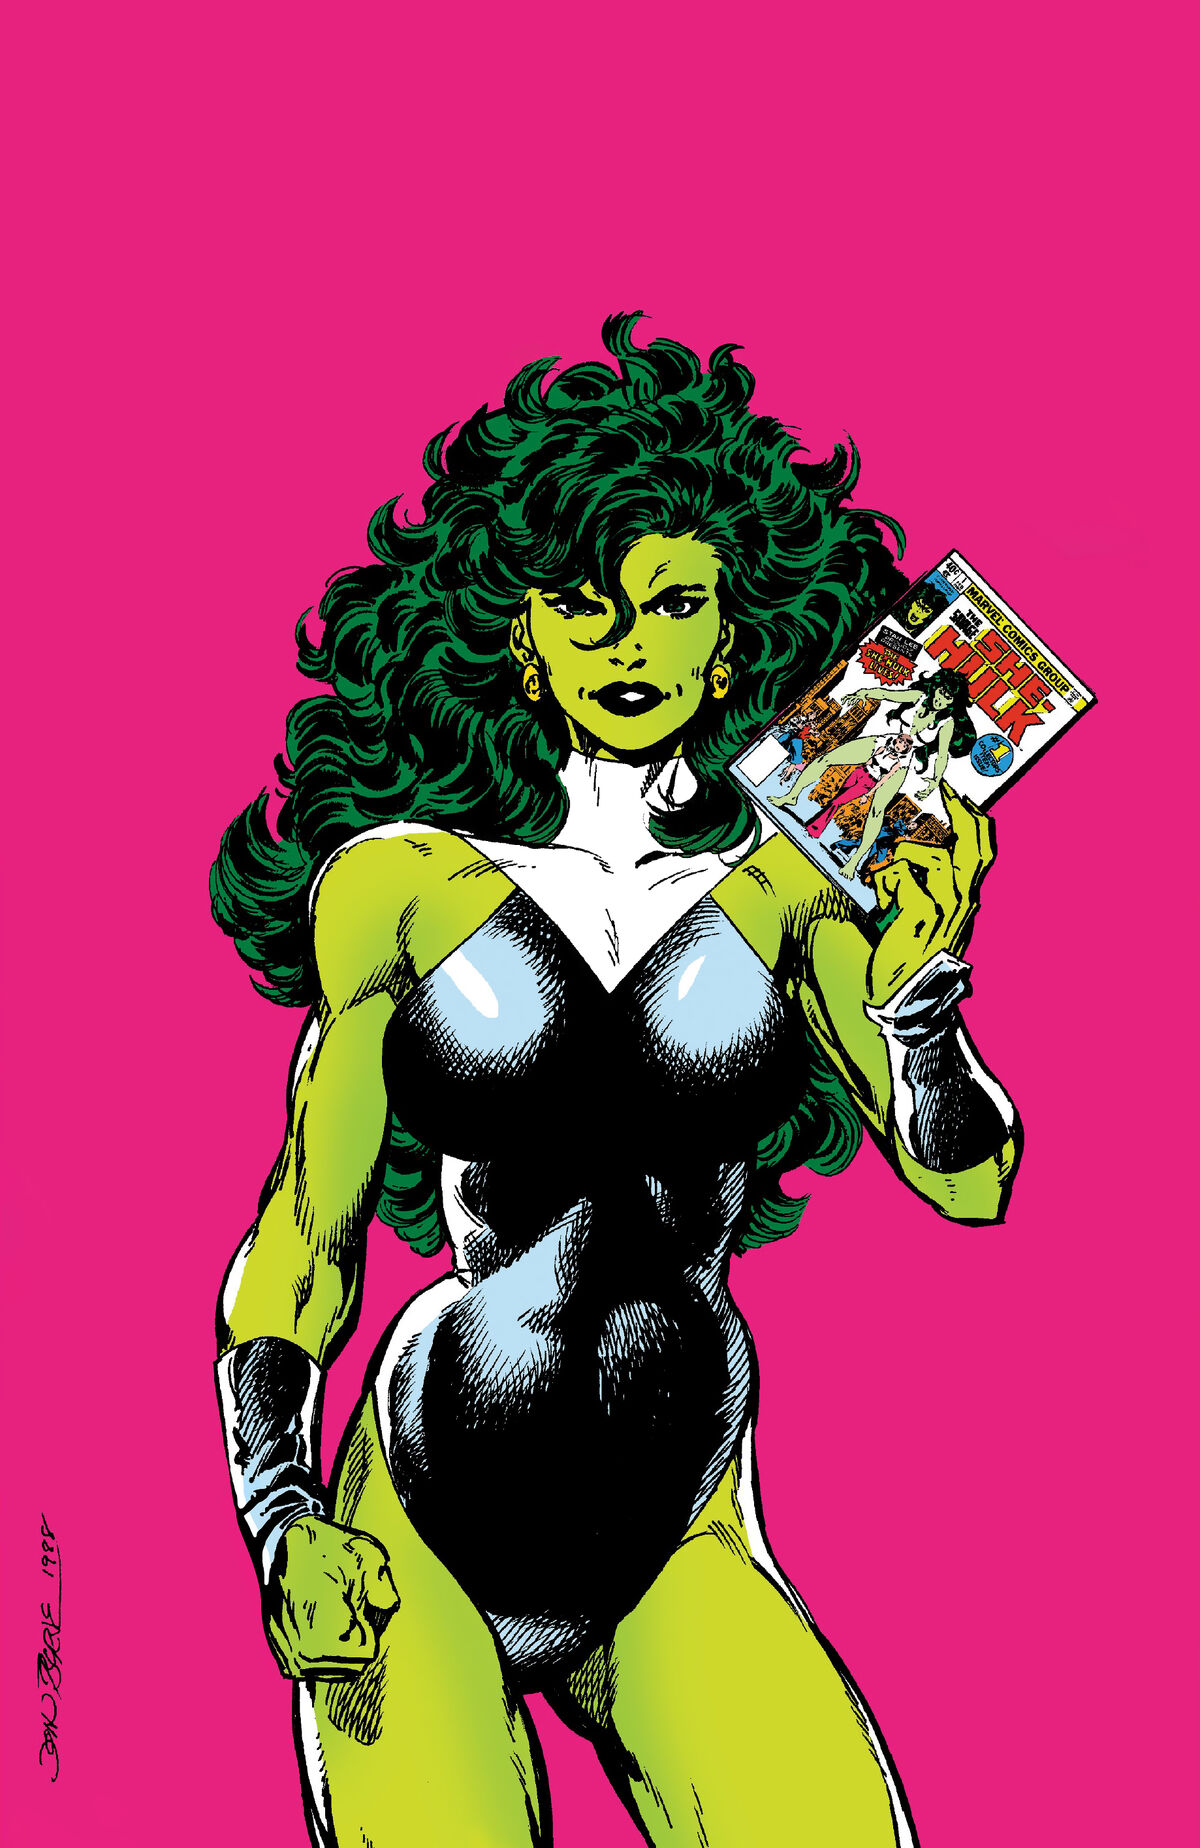 Sensational She-Hulk Vol 1 1 | Marvel Database | Fandom